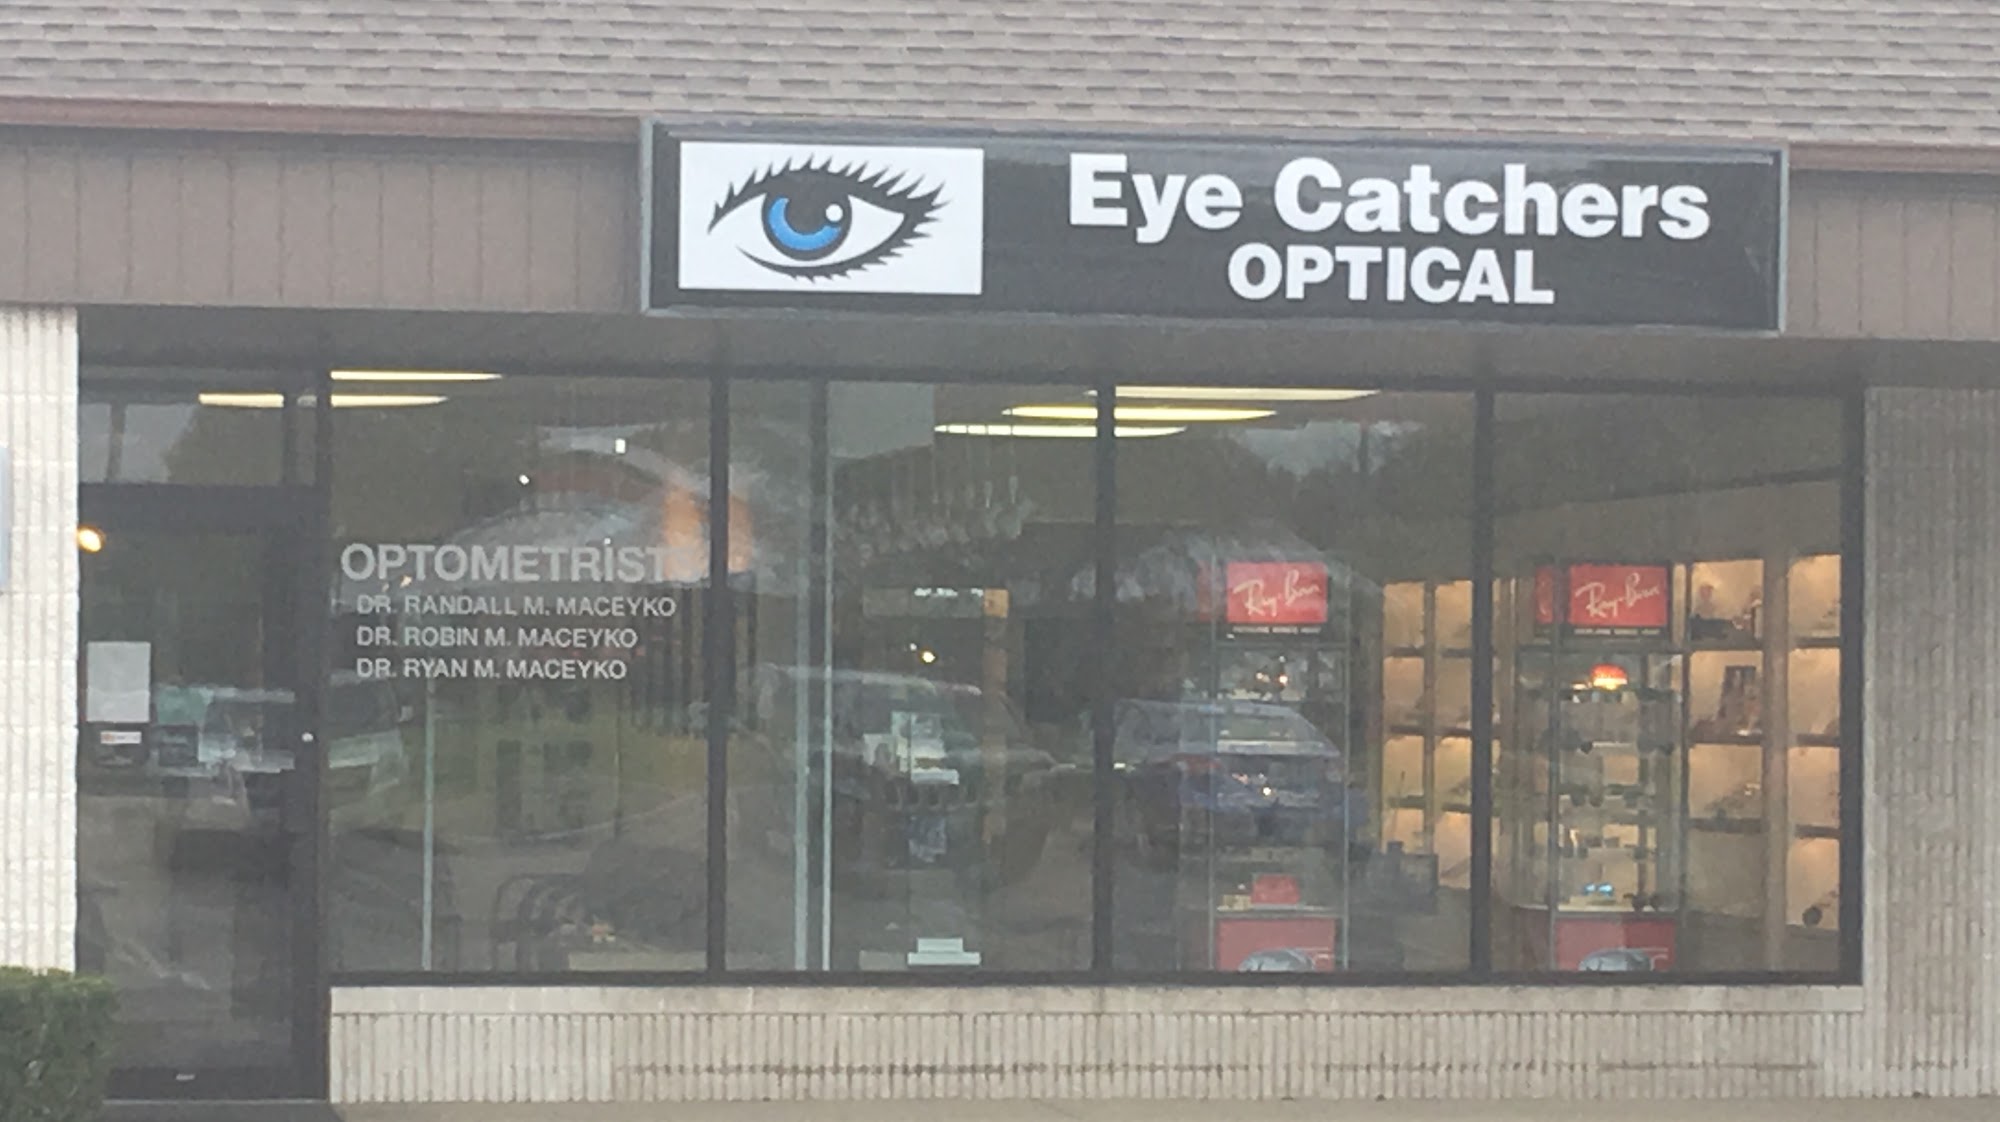 Eye Catchers Optical 915 Columbiana-Canfield Rd, Columbiana Ohio 44408